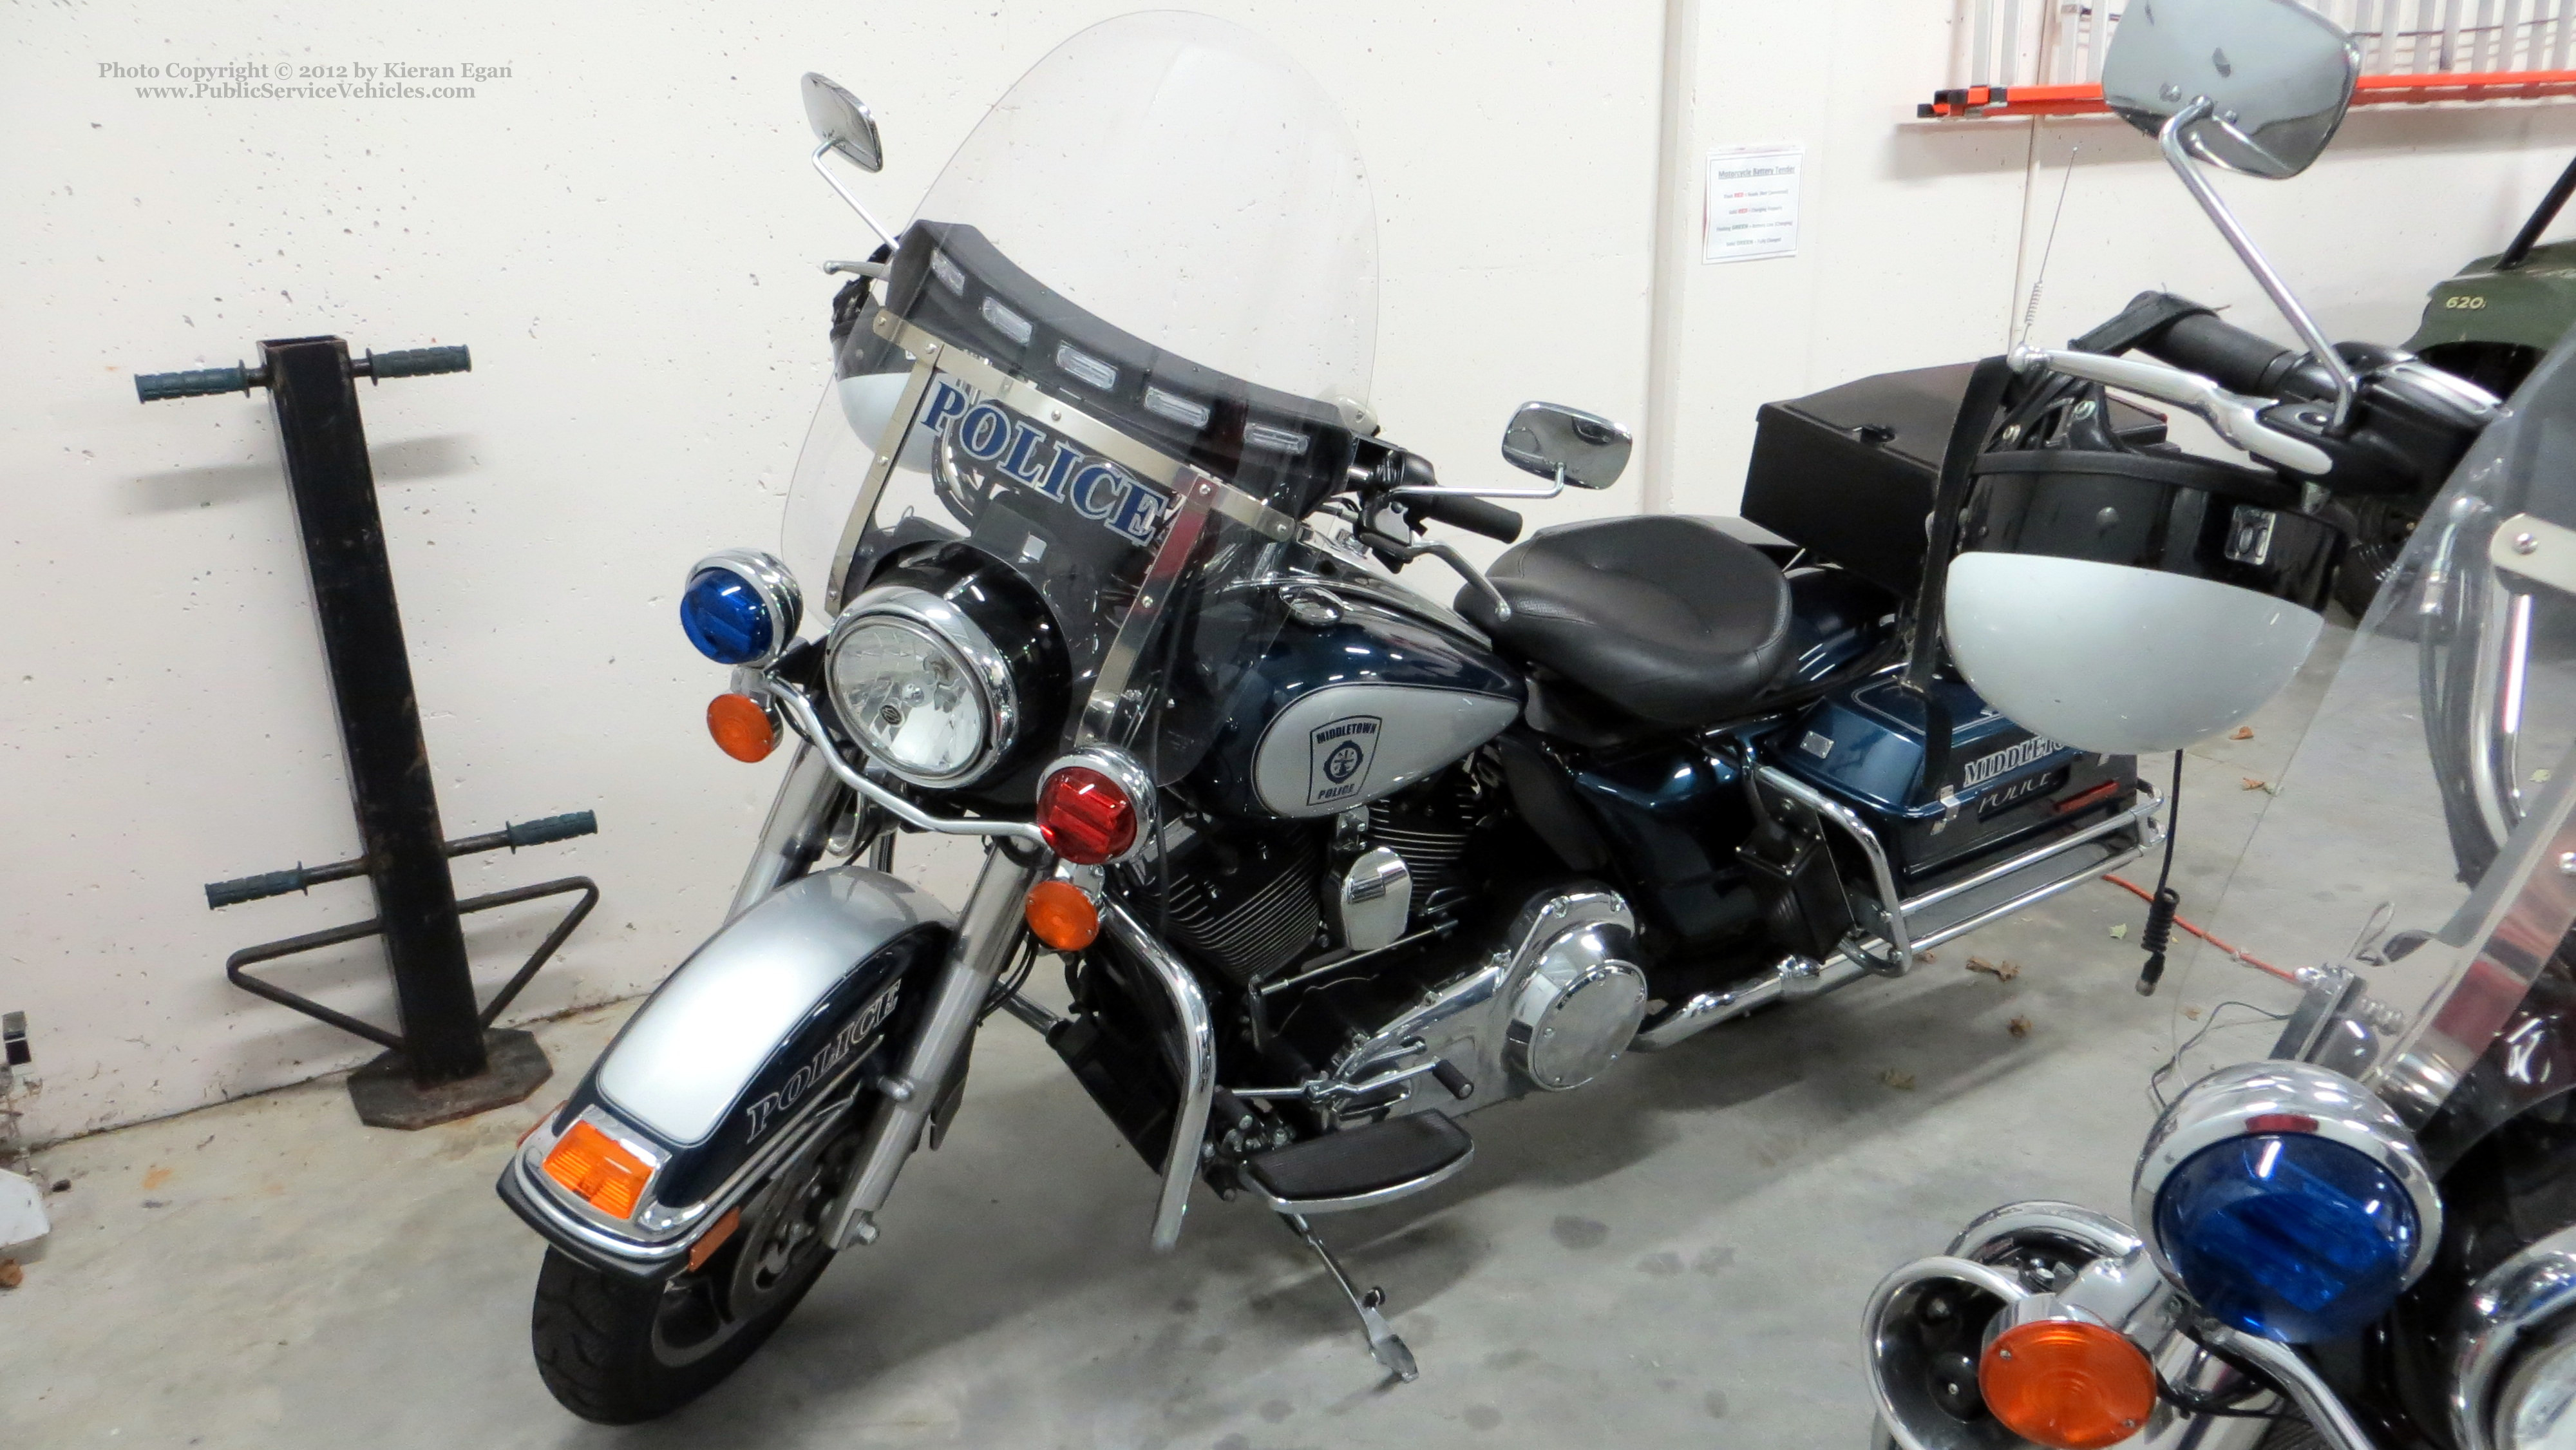 A photo  of Middletown Police
            Motorcycle 86, a 2005-2012 Harley Davidson Electra Glide             taken by Kieran Egan